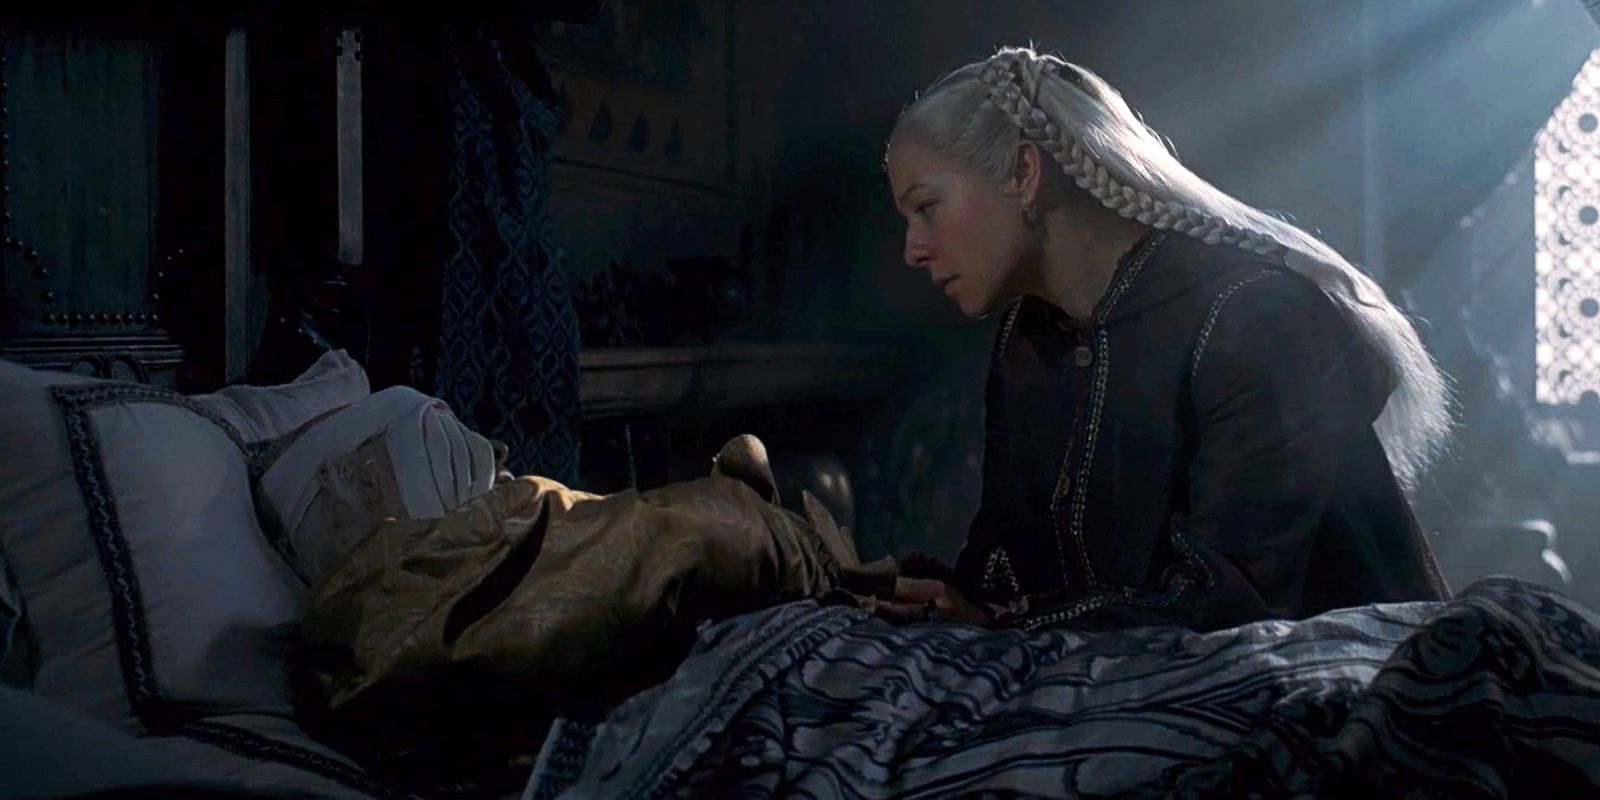 Emma D'Arcy as Rhaenyra Targaryen and Paddy Considine as Viserys Targaryen in HOTD episode 8